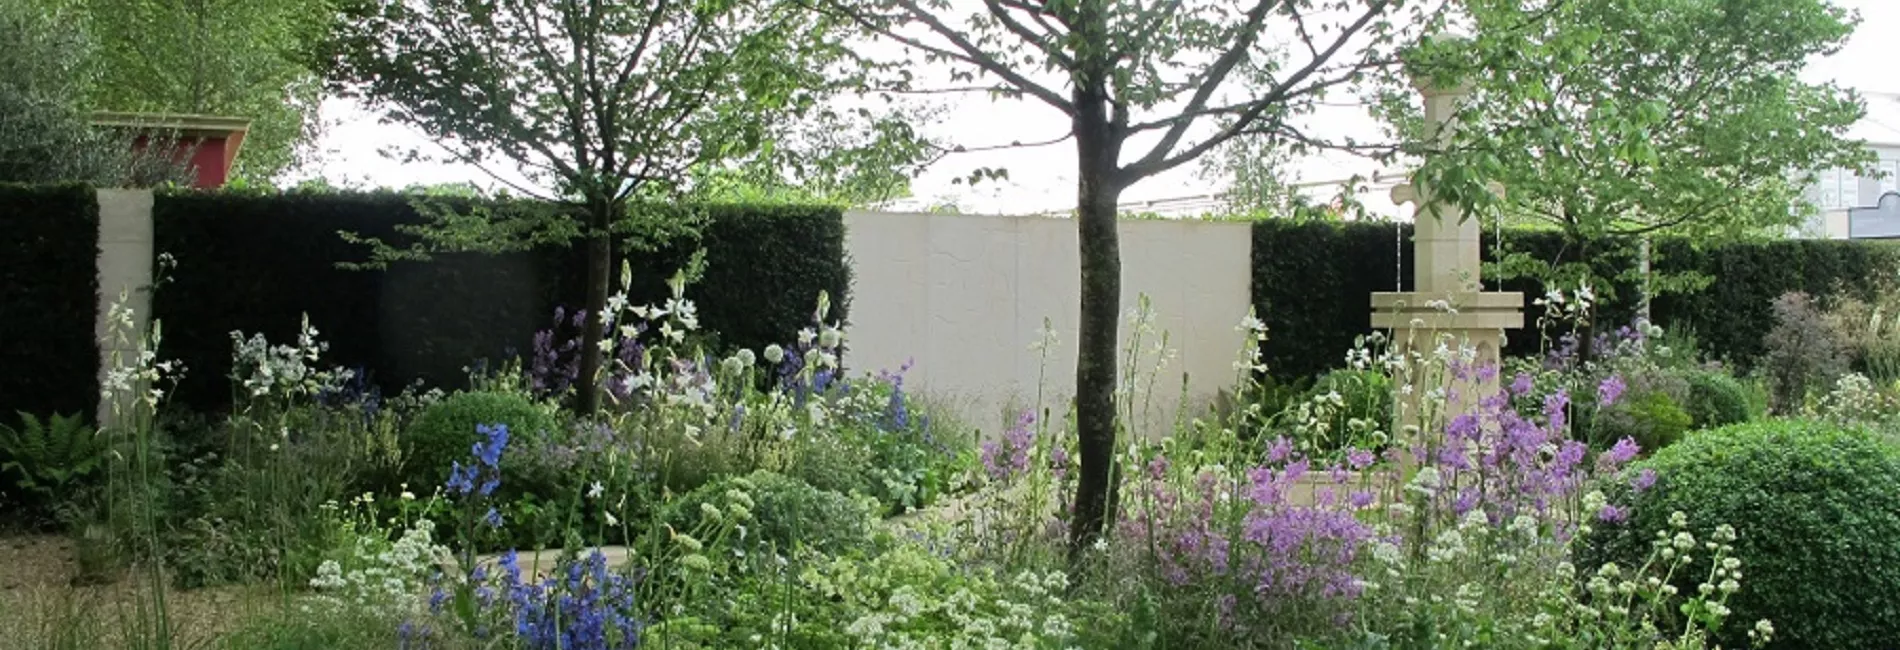 Paratiisin puutarha, Chelsea Flowershow 2014